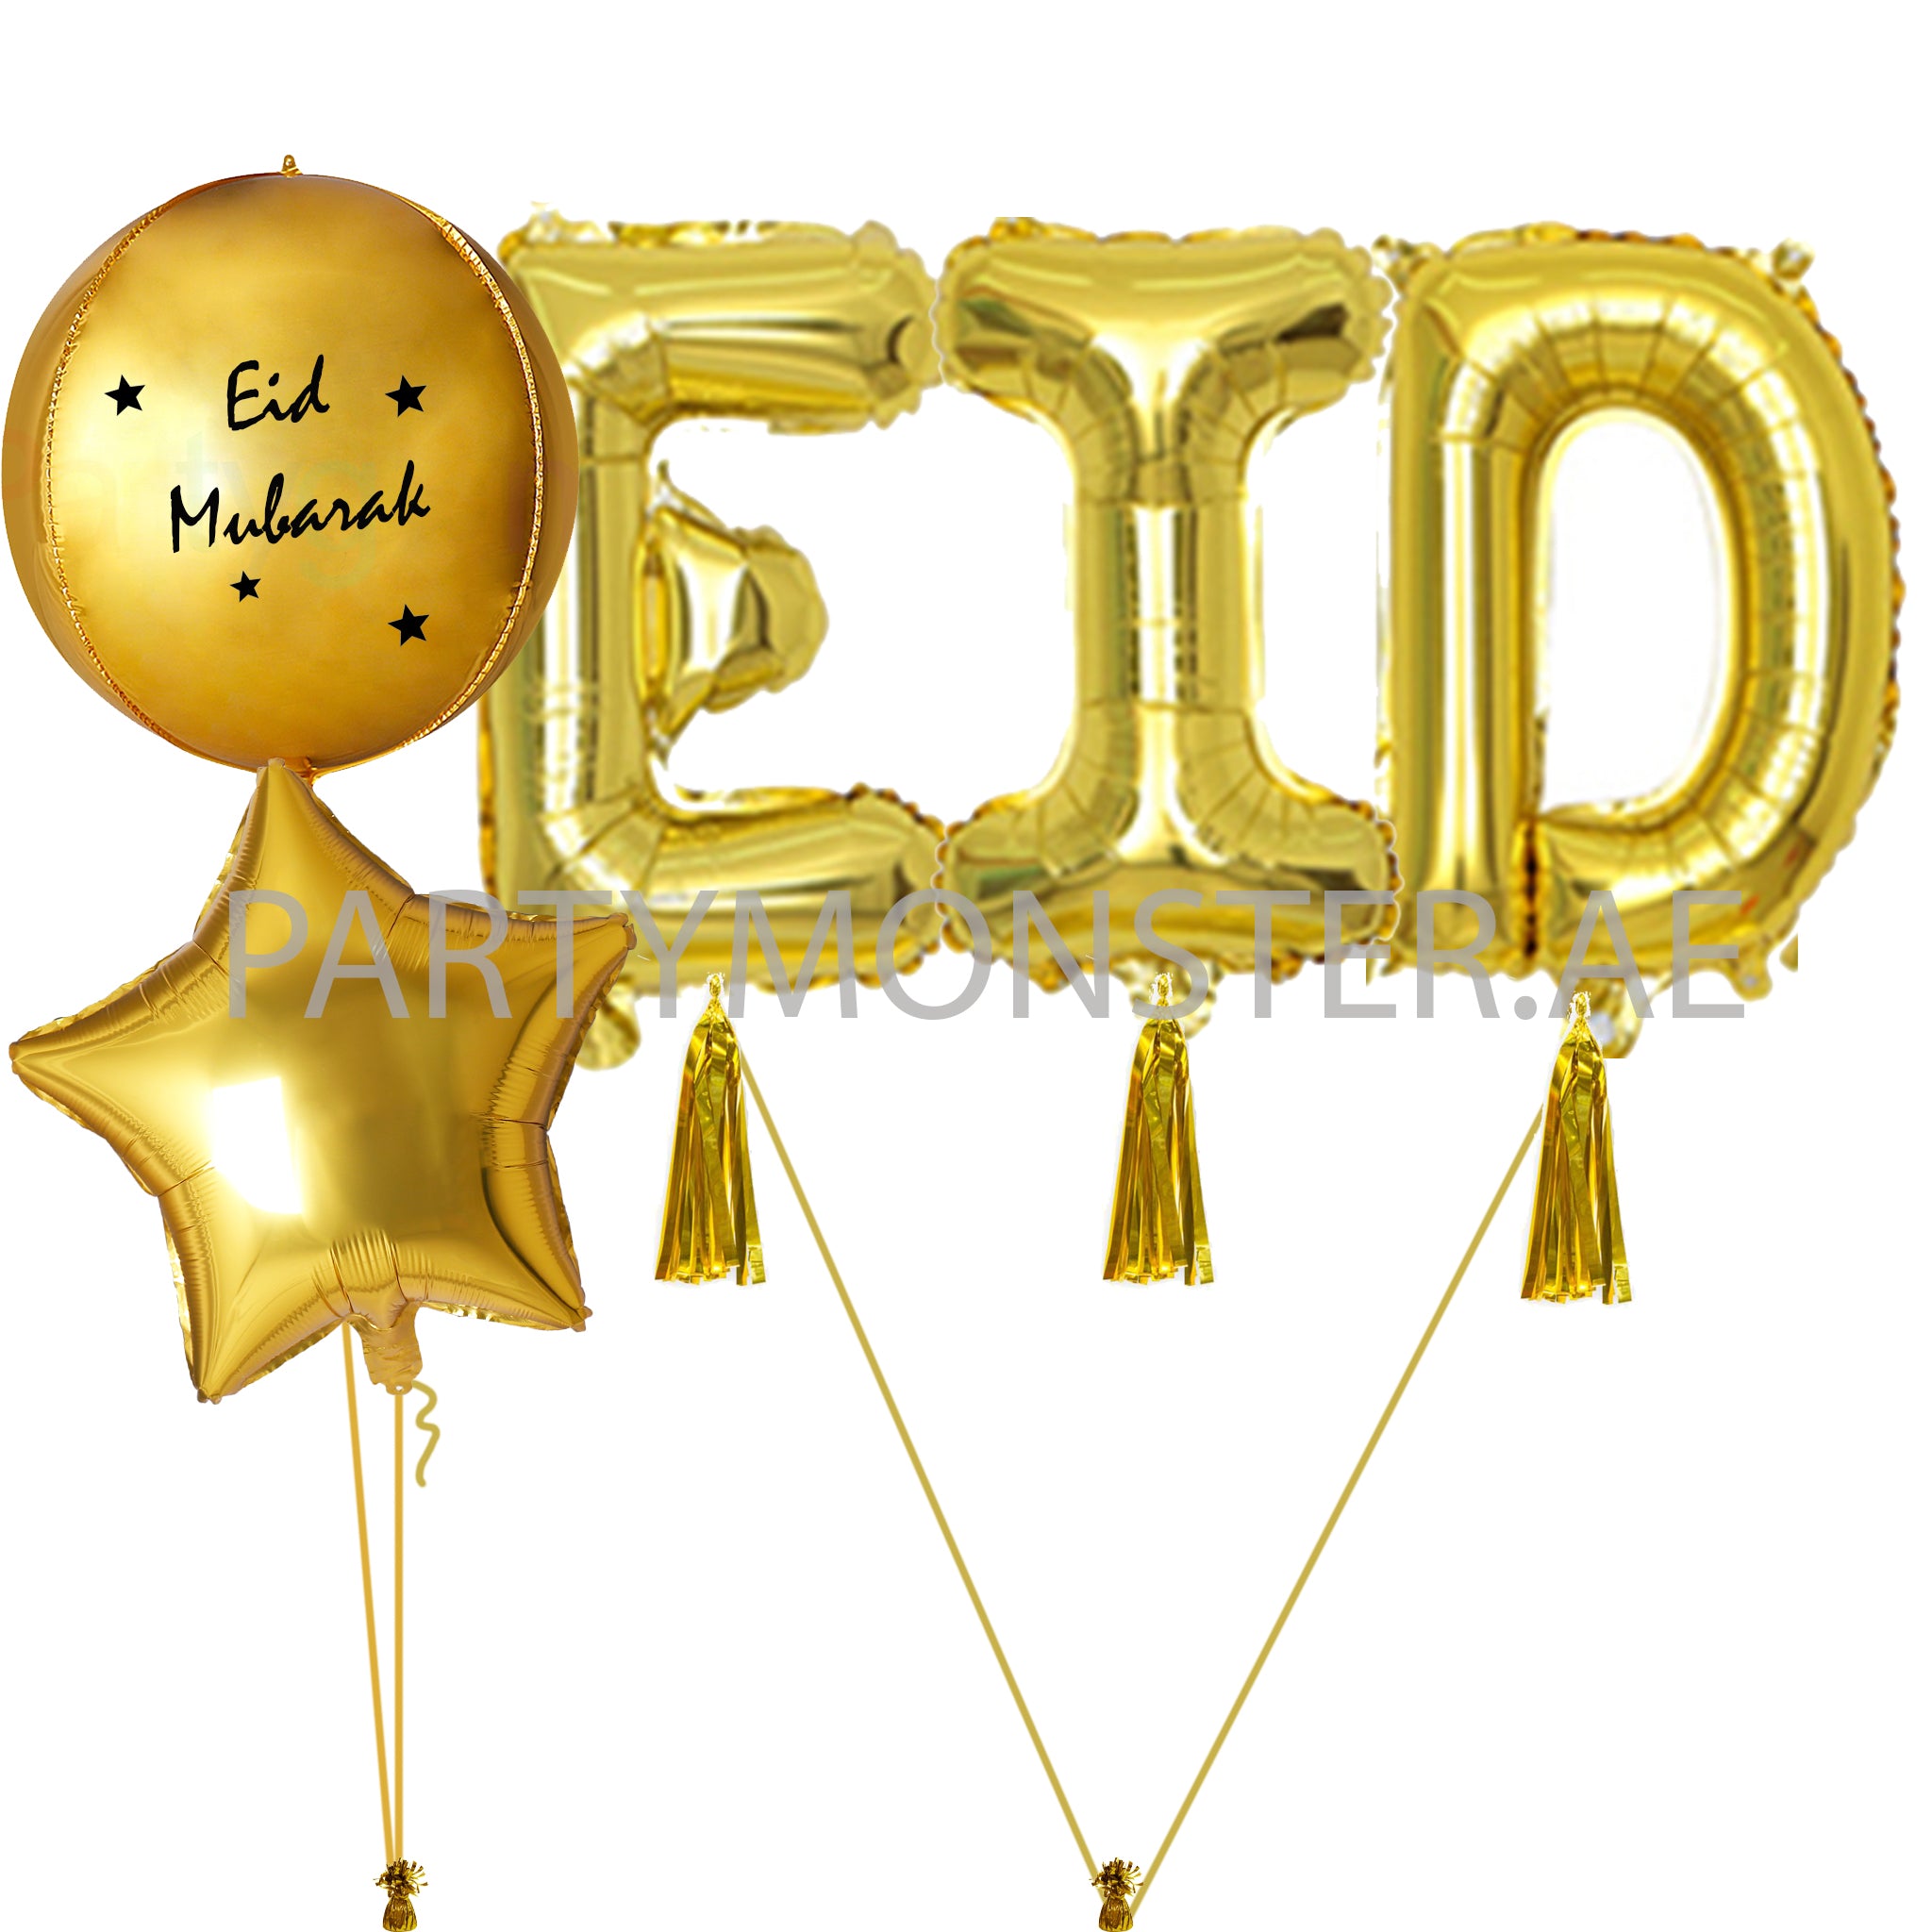 Eid Mubarak Balloons Bouquet